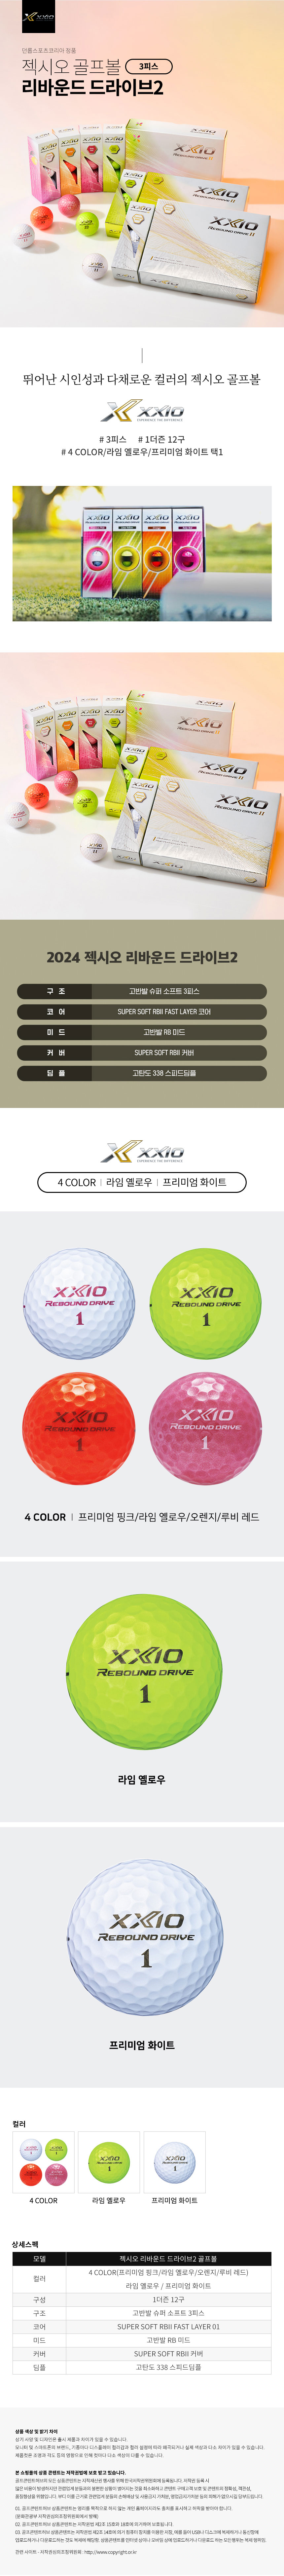 dunlop_xexio_rebound_drive_golf_ball_23.jpg